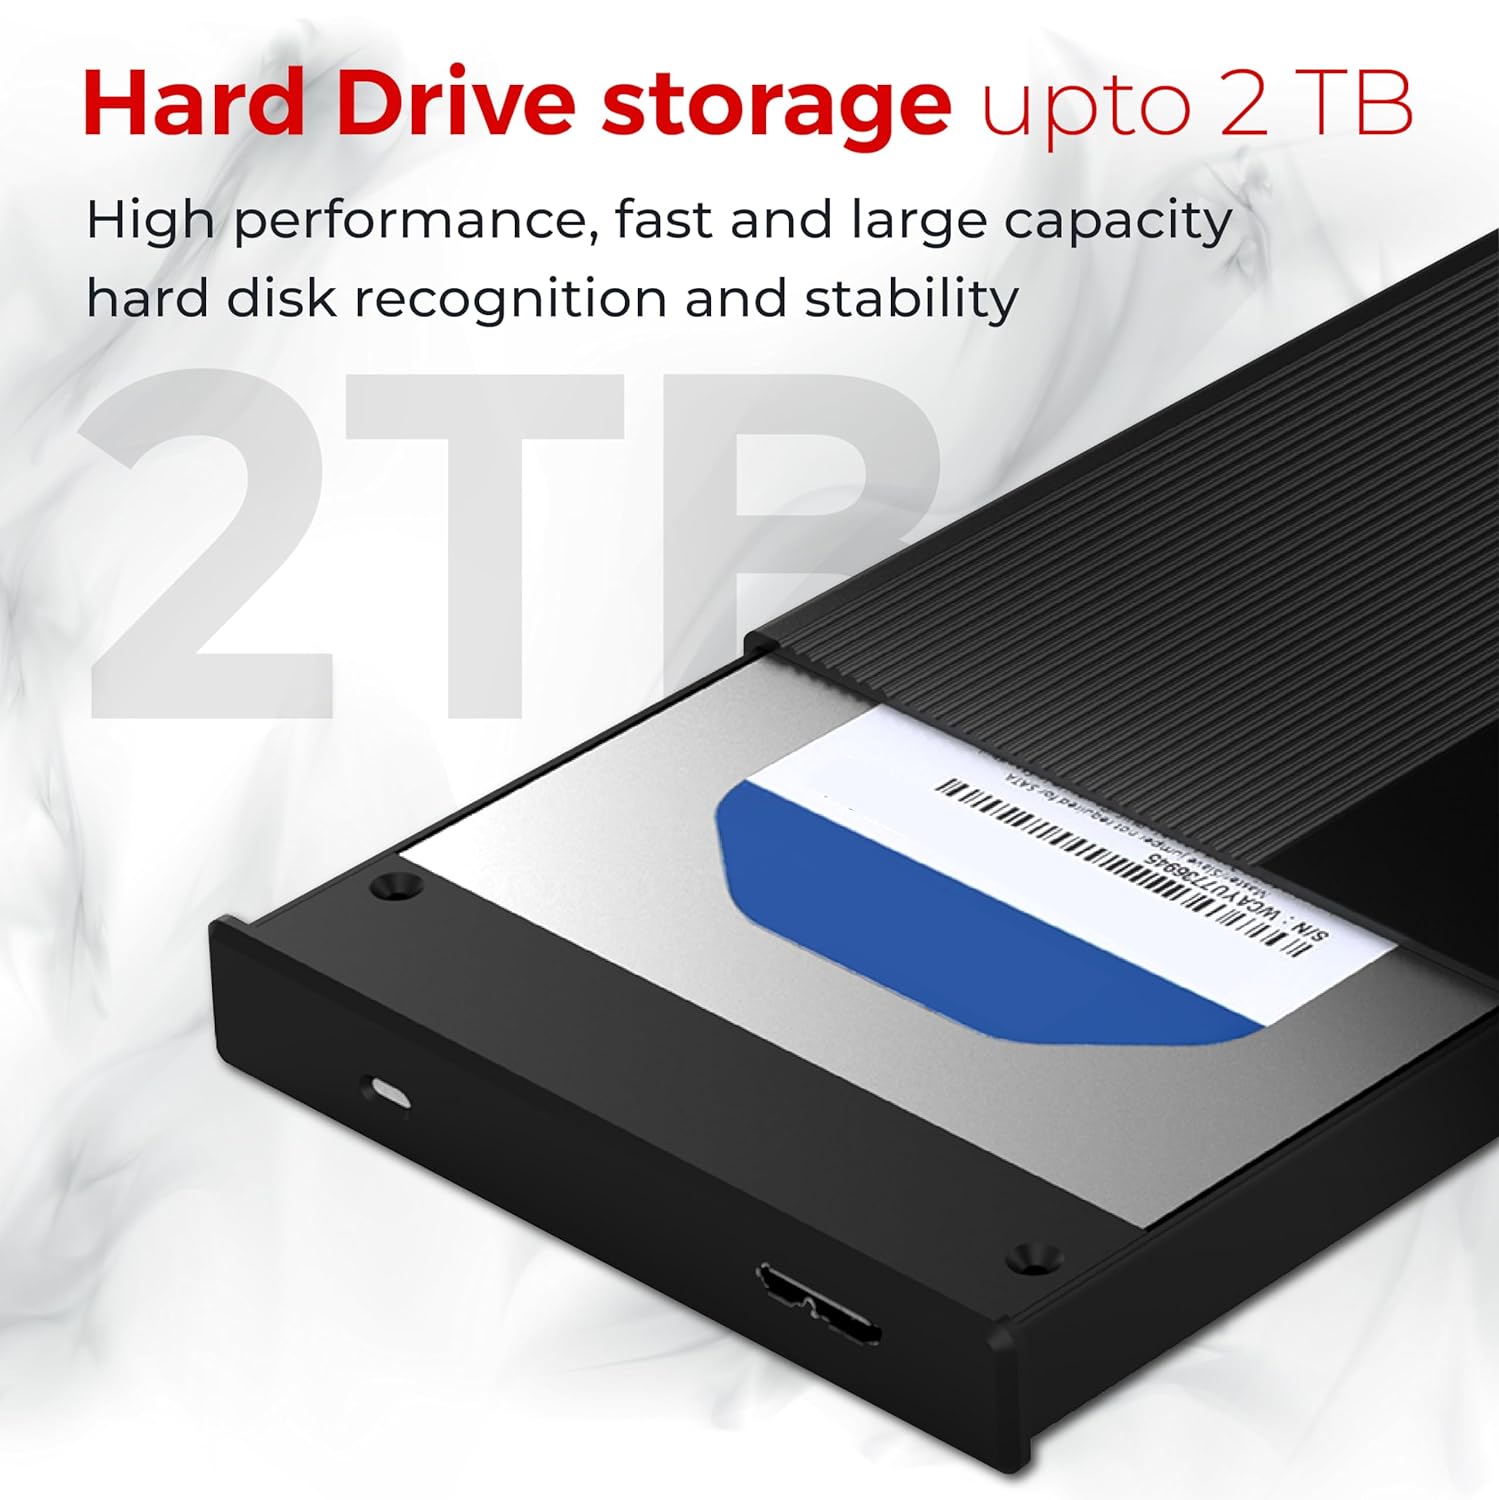 SUHSAI External Hard Drive 100GB USB 3.0 Portable Hard Disk Storage & Memory Expansion HDD, Backup External Hard Drive for Laptop Computer, MacBook, and Desktop (Silver)